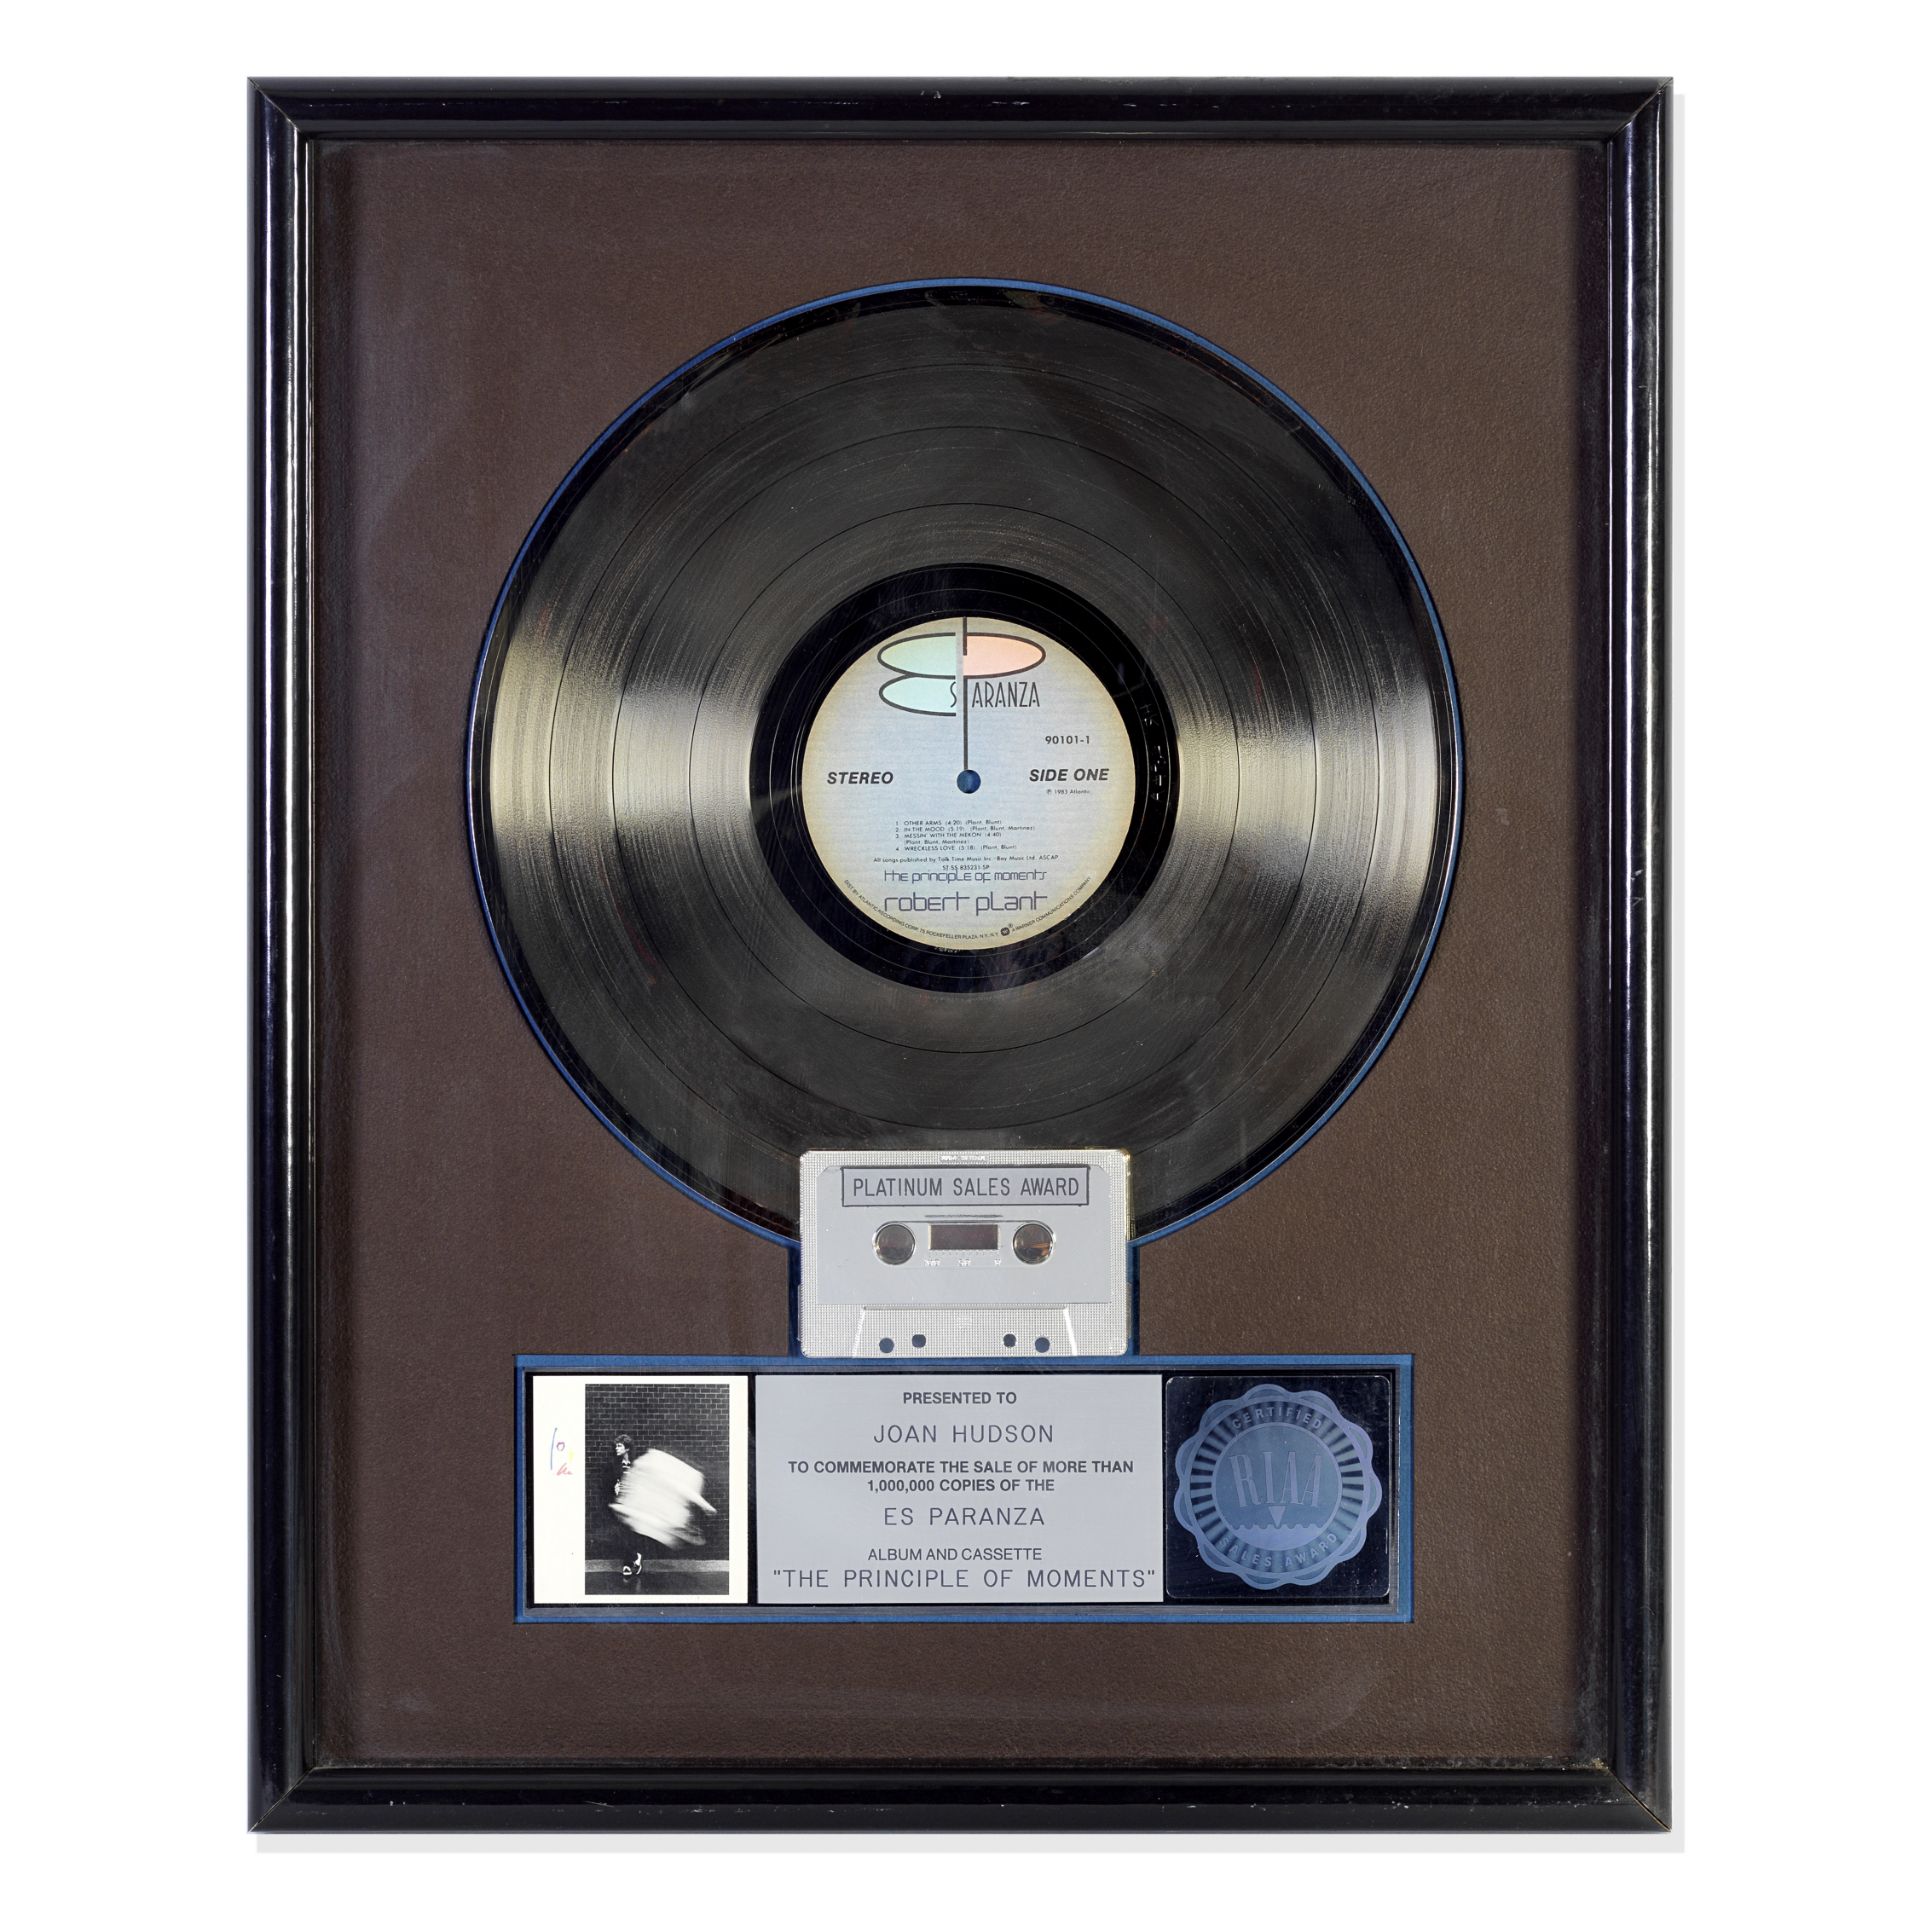 Robert Plant: A RIAA 'Platinum' Disc Award For The Album The Principle Of Moments, 1984,